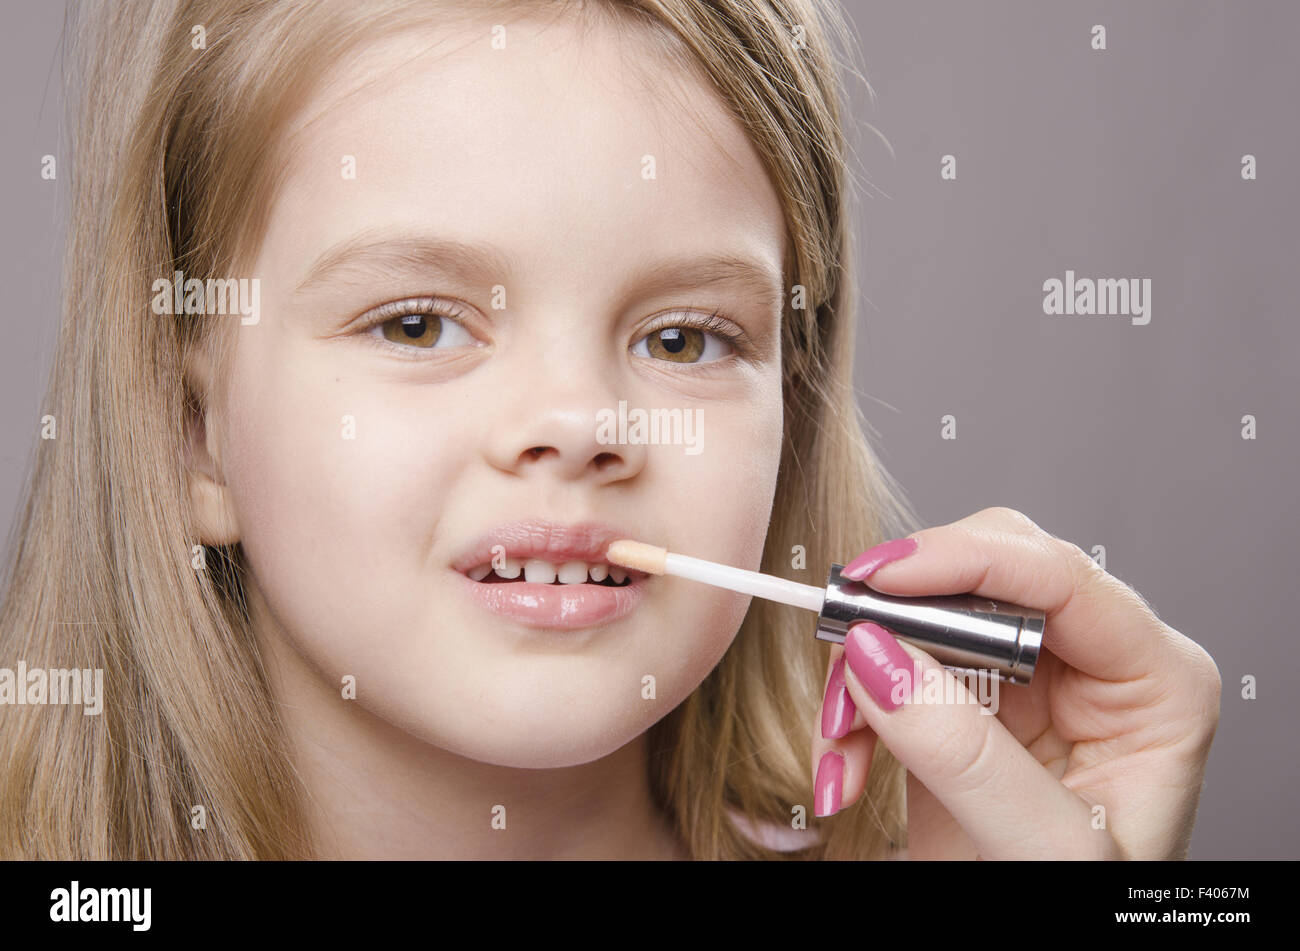 Makeup artist deals Shine on the lips girls Stock Photo